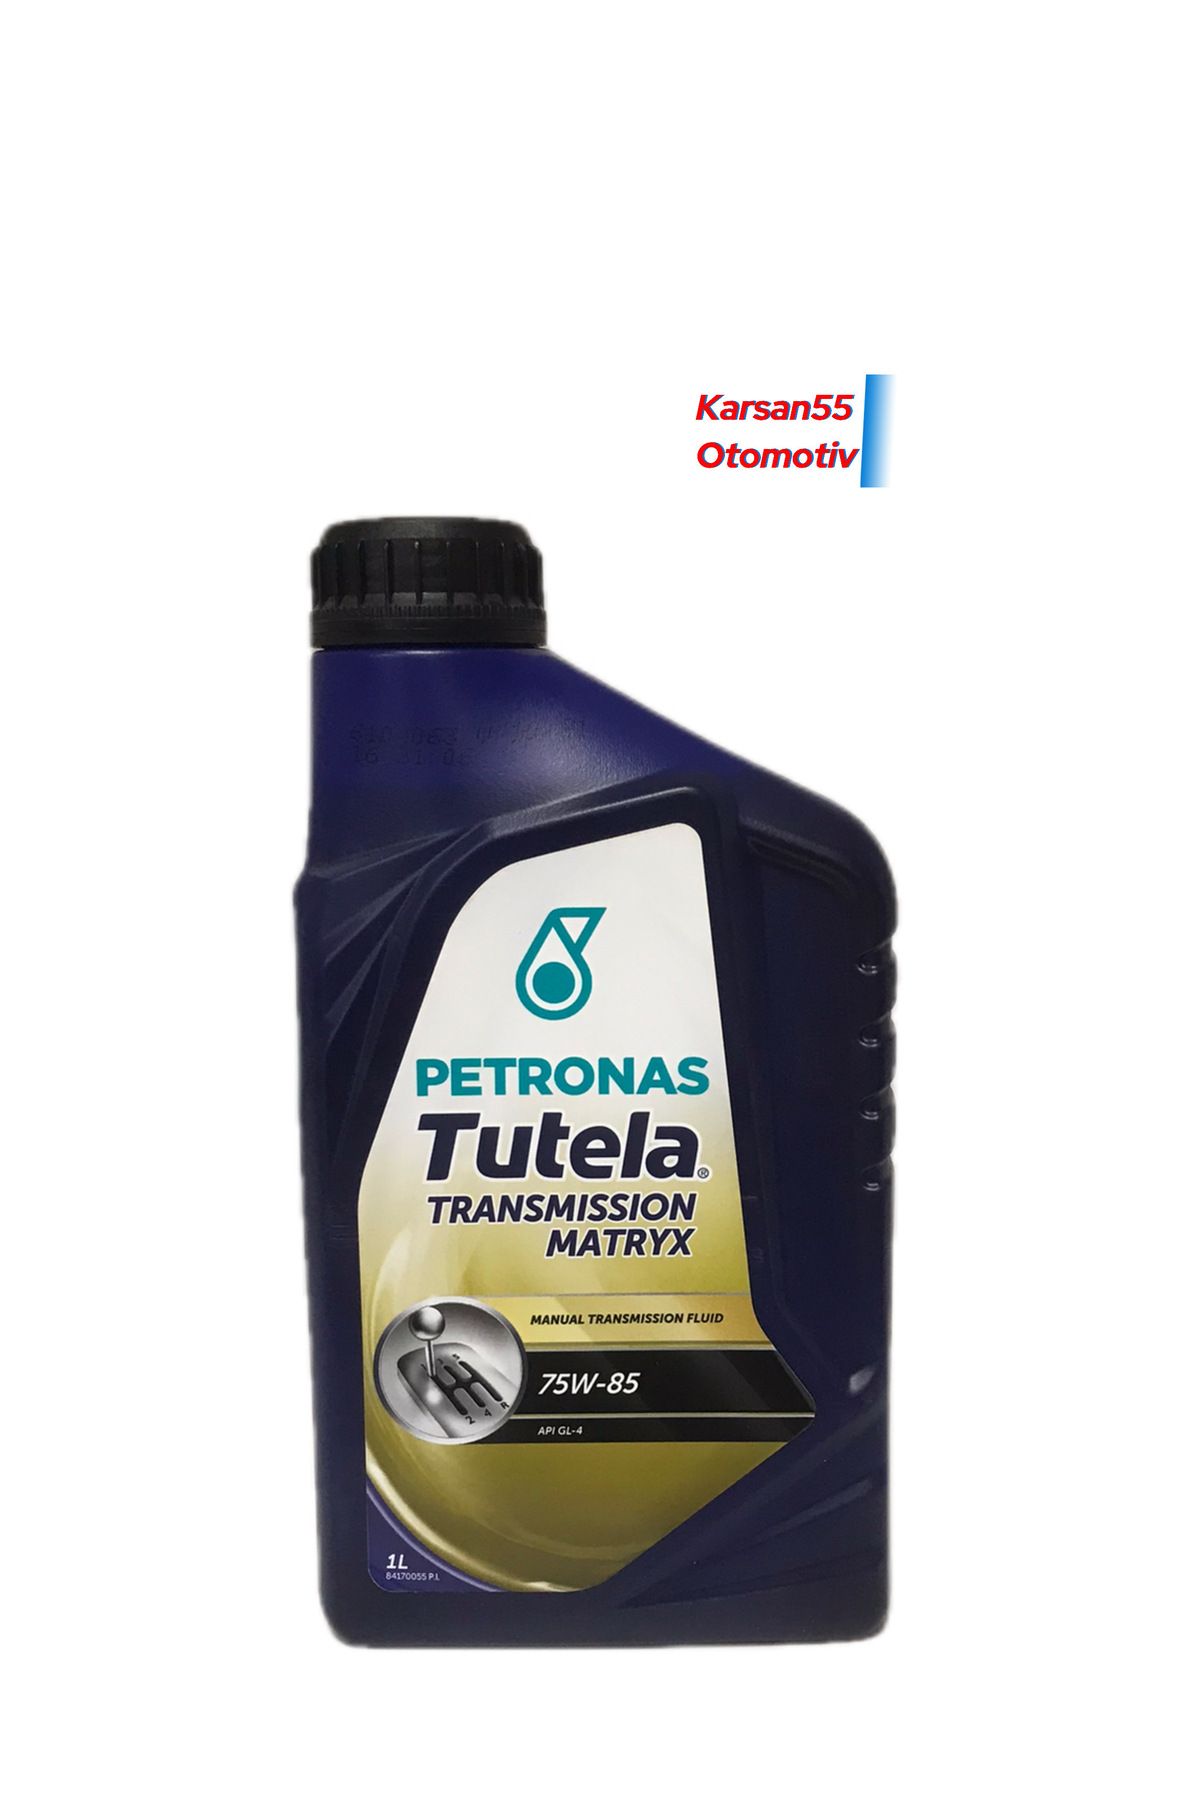 Petronas Tutela 75w-85 Transmıssıon Matryx 1lt.